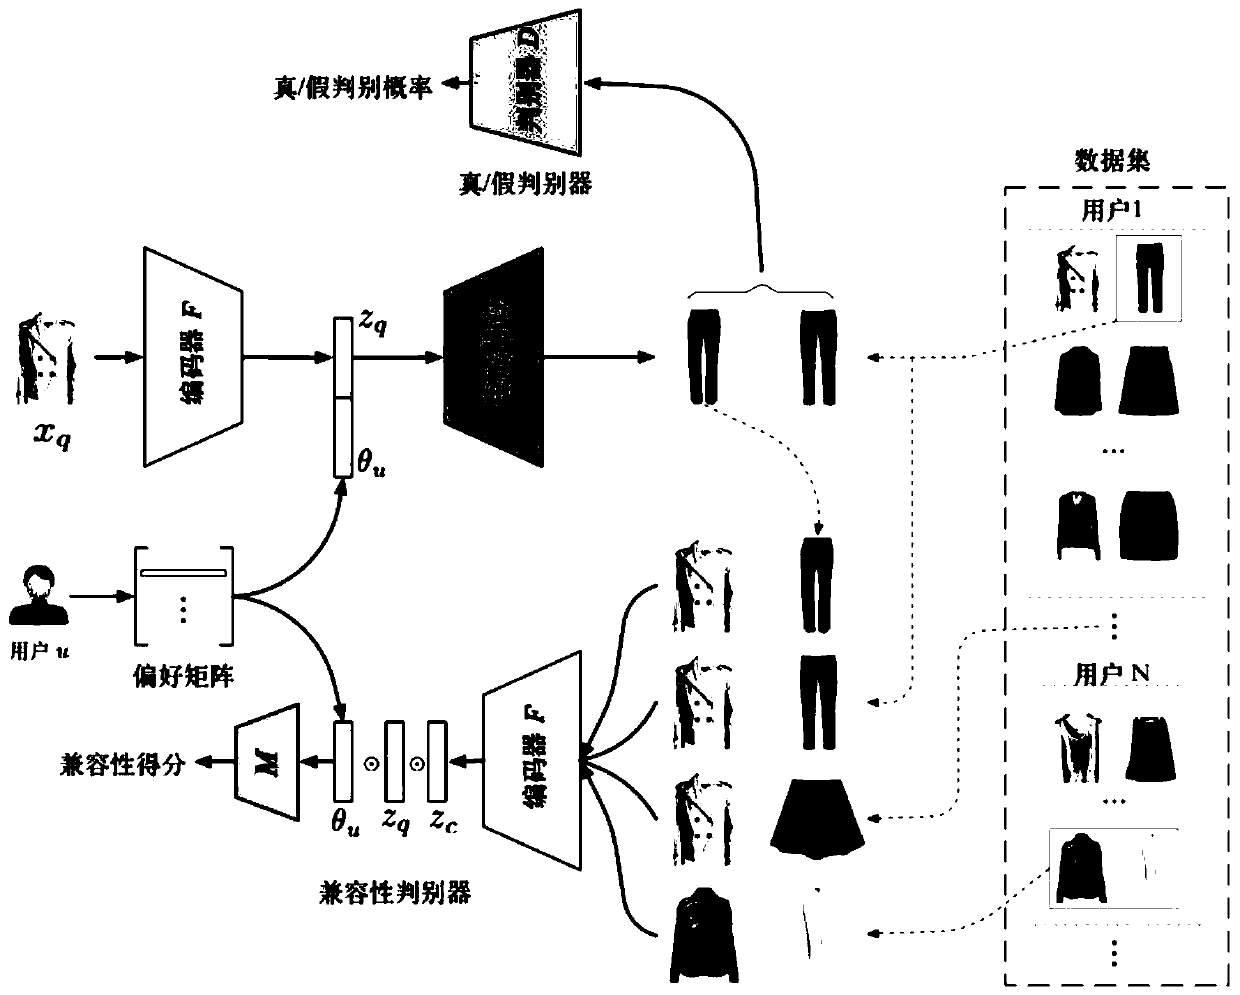 Costume collocation generation method based on generative adversarial network